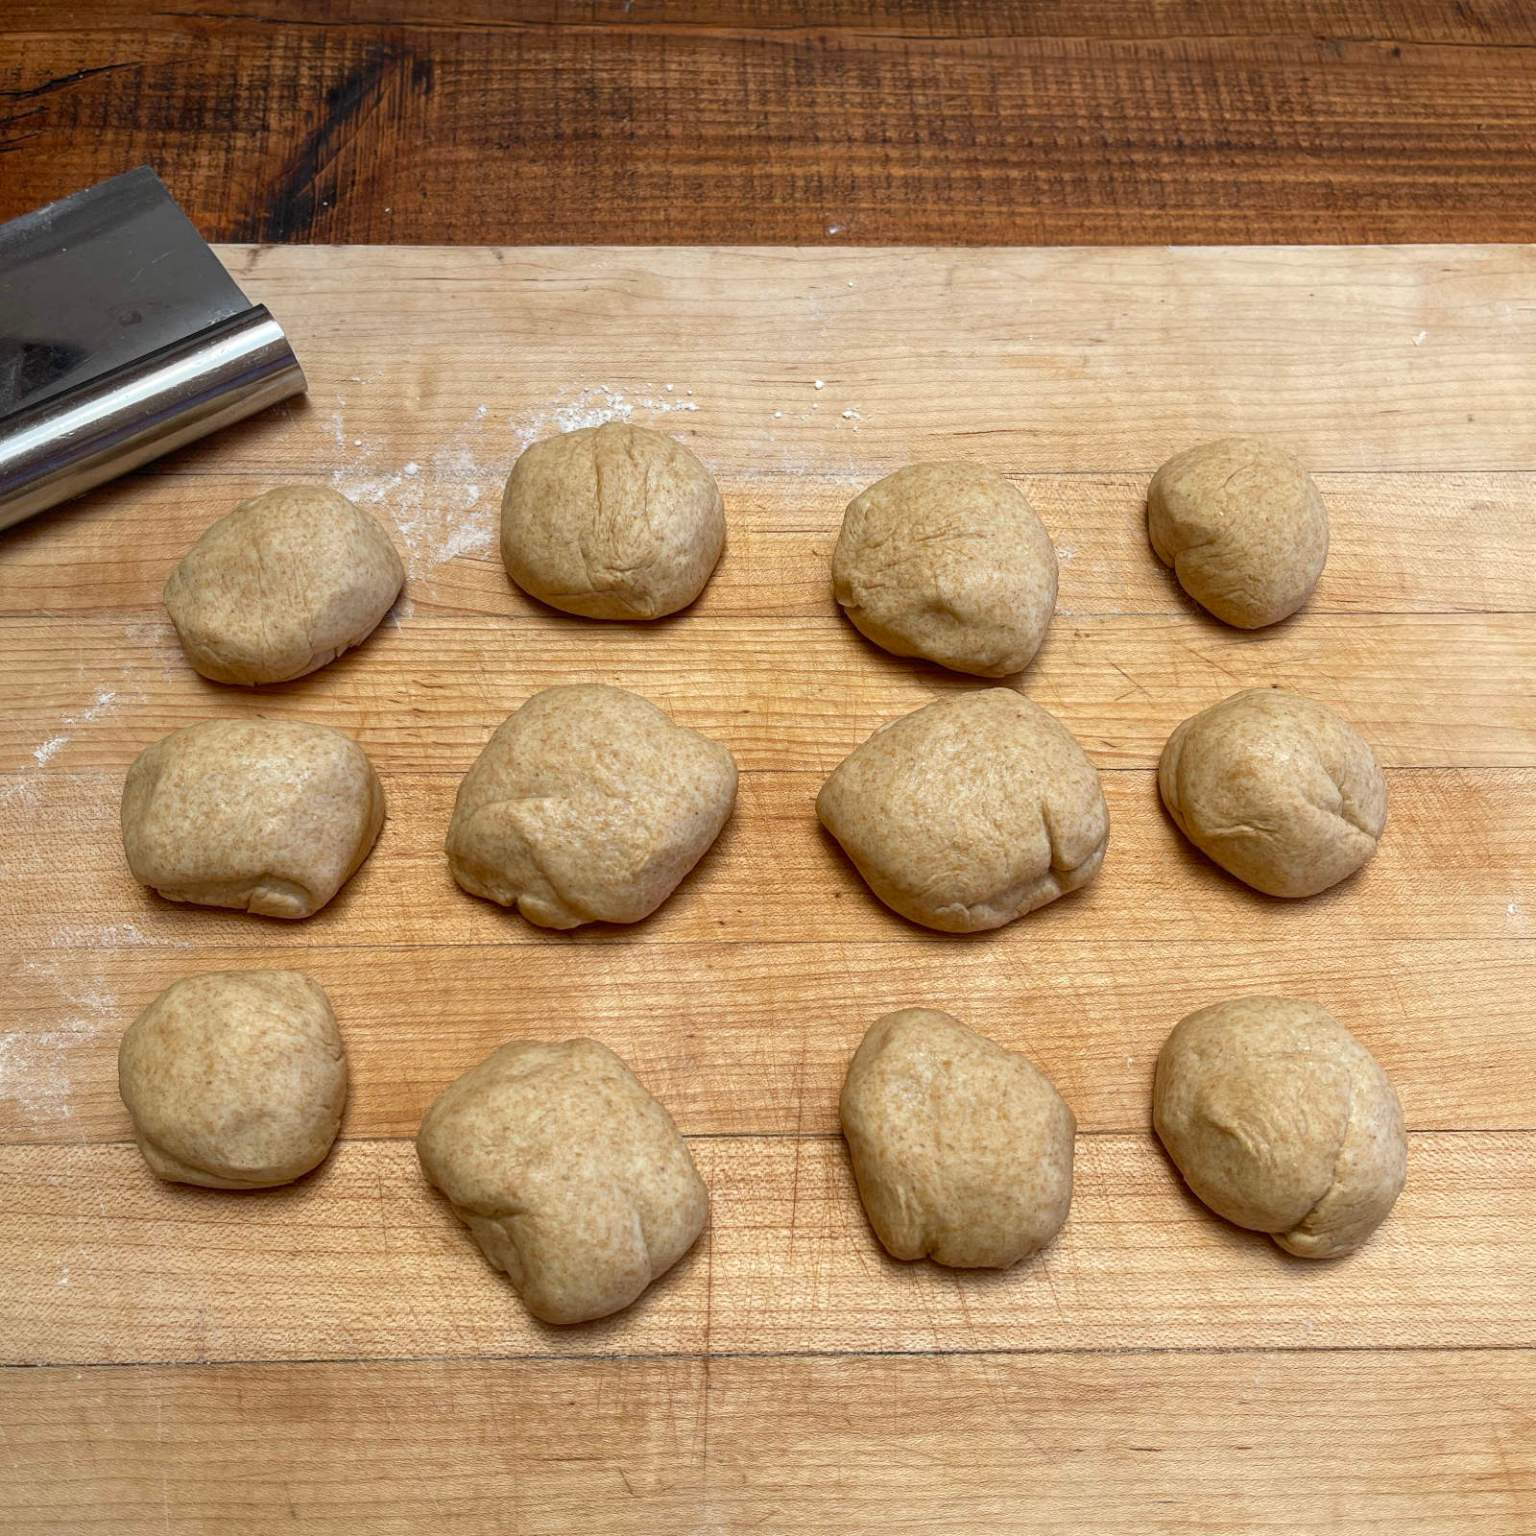 12 balls of wheat tortilla dough sit on a wooden board